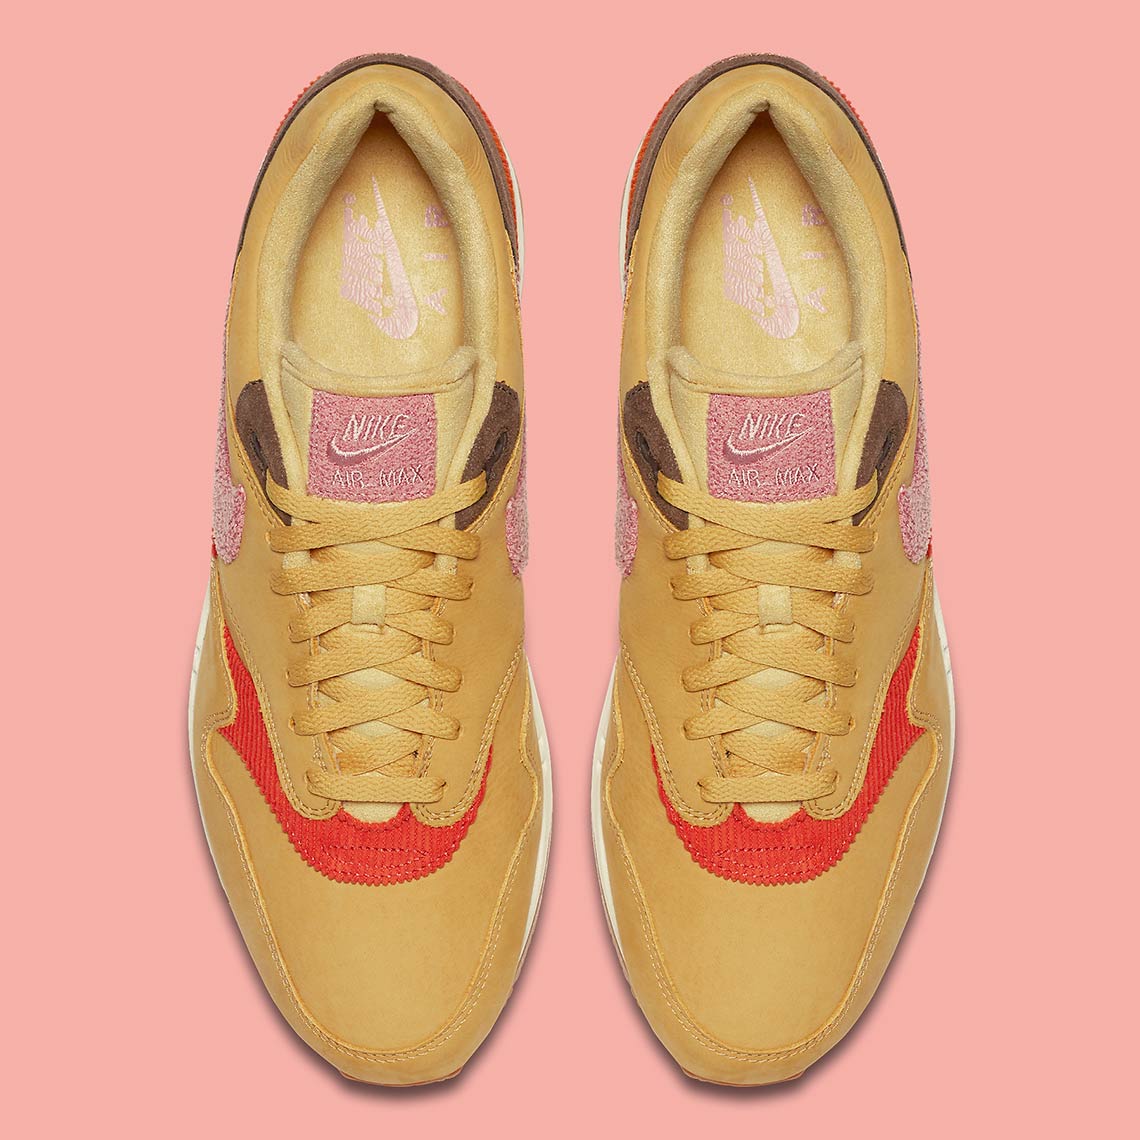 Nike Air Max 1 Wheat Gold / Rust Pink-Baroque Brown